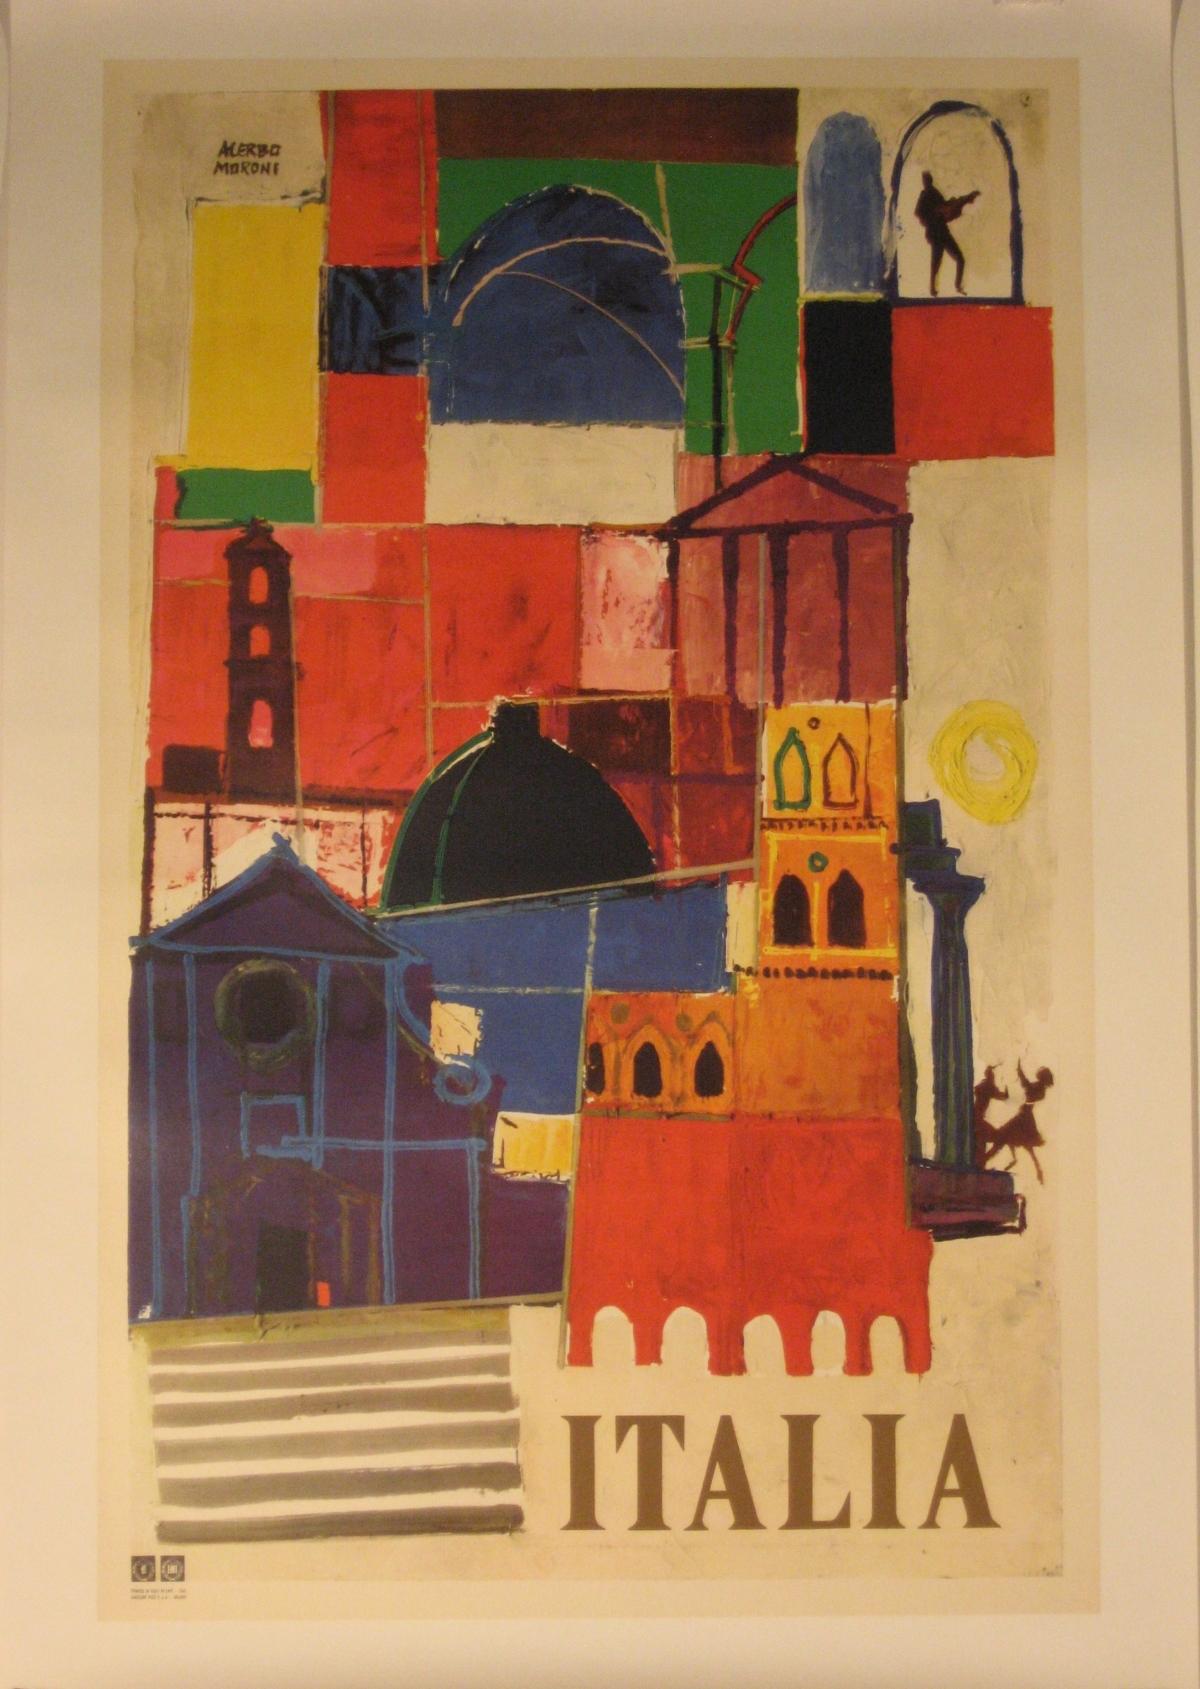 Künstler: Alerbo Moroni  (Italiener, 1907 - 2002)

Ursprungsdatum: 1963

Medium:  Original Offsetlithographie Vintage Poster

Größe: 27